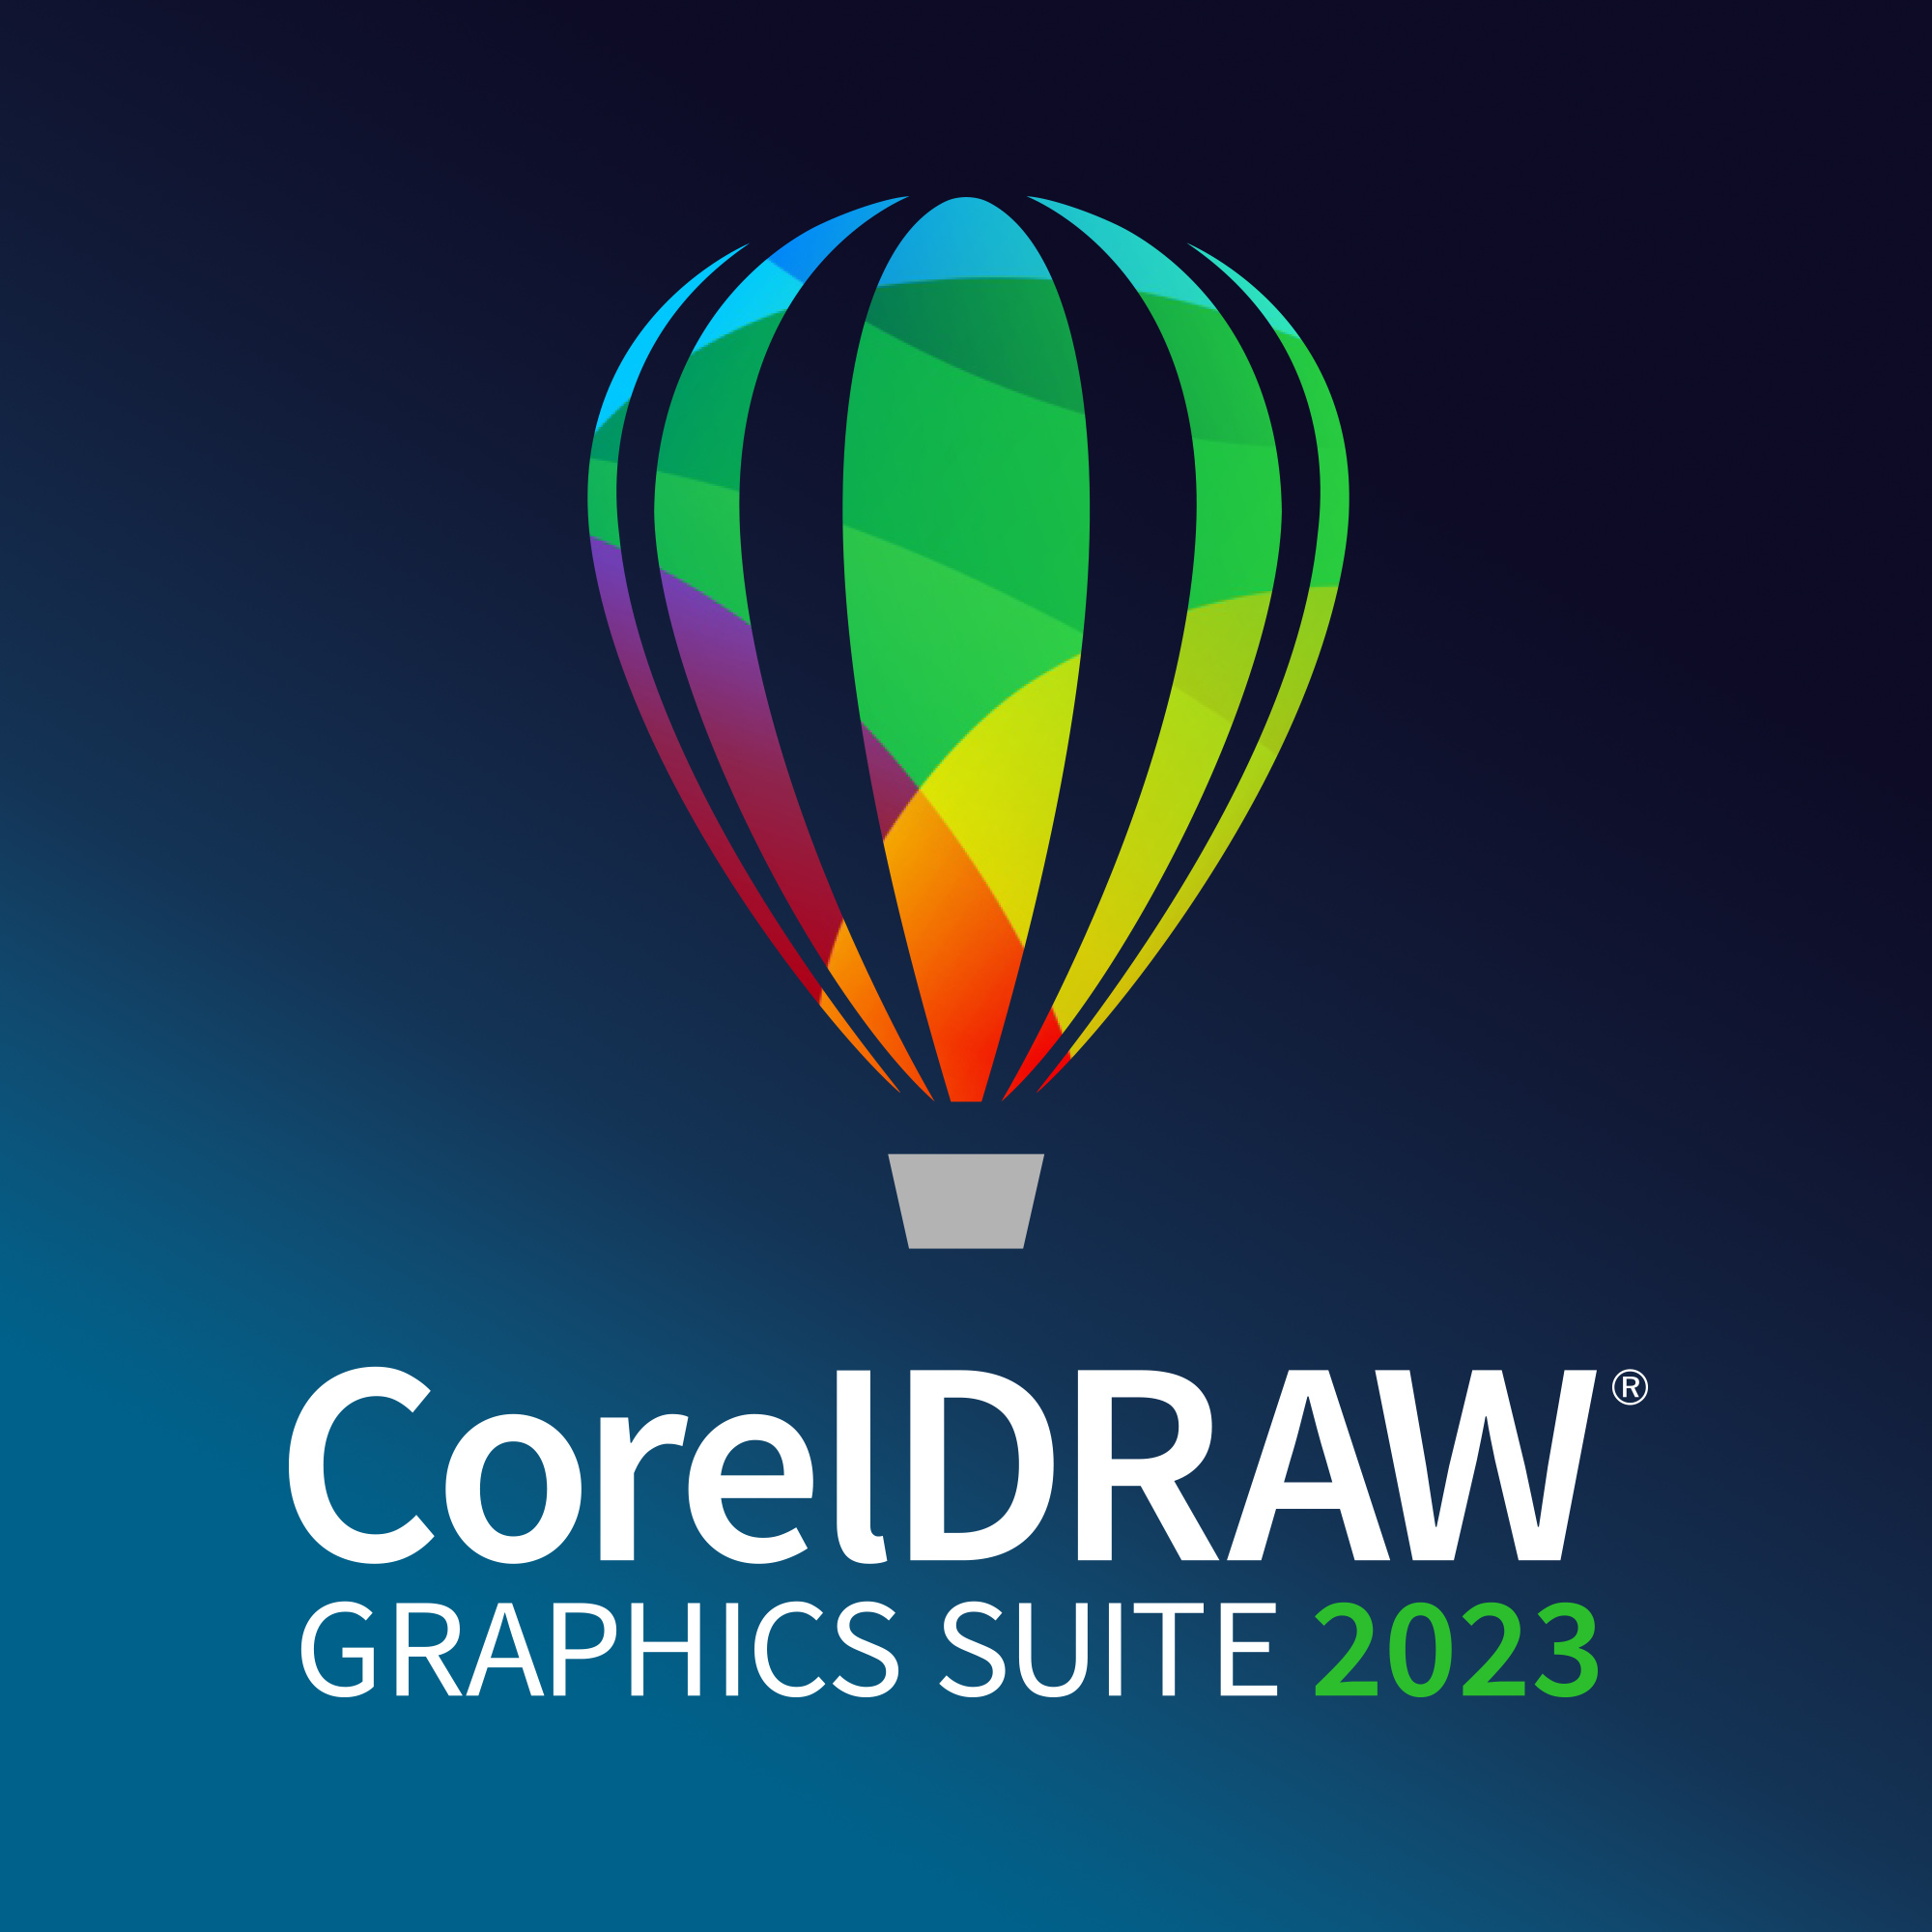 CorelDRAW Graphics Suite 2023 Gia Re Mua Mot Lan Dung Vinh Vien 